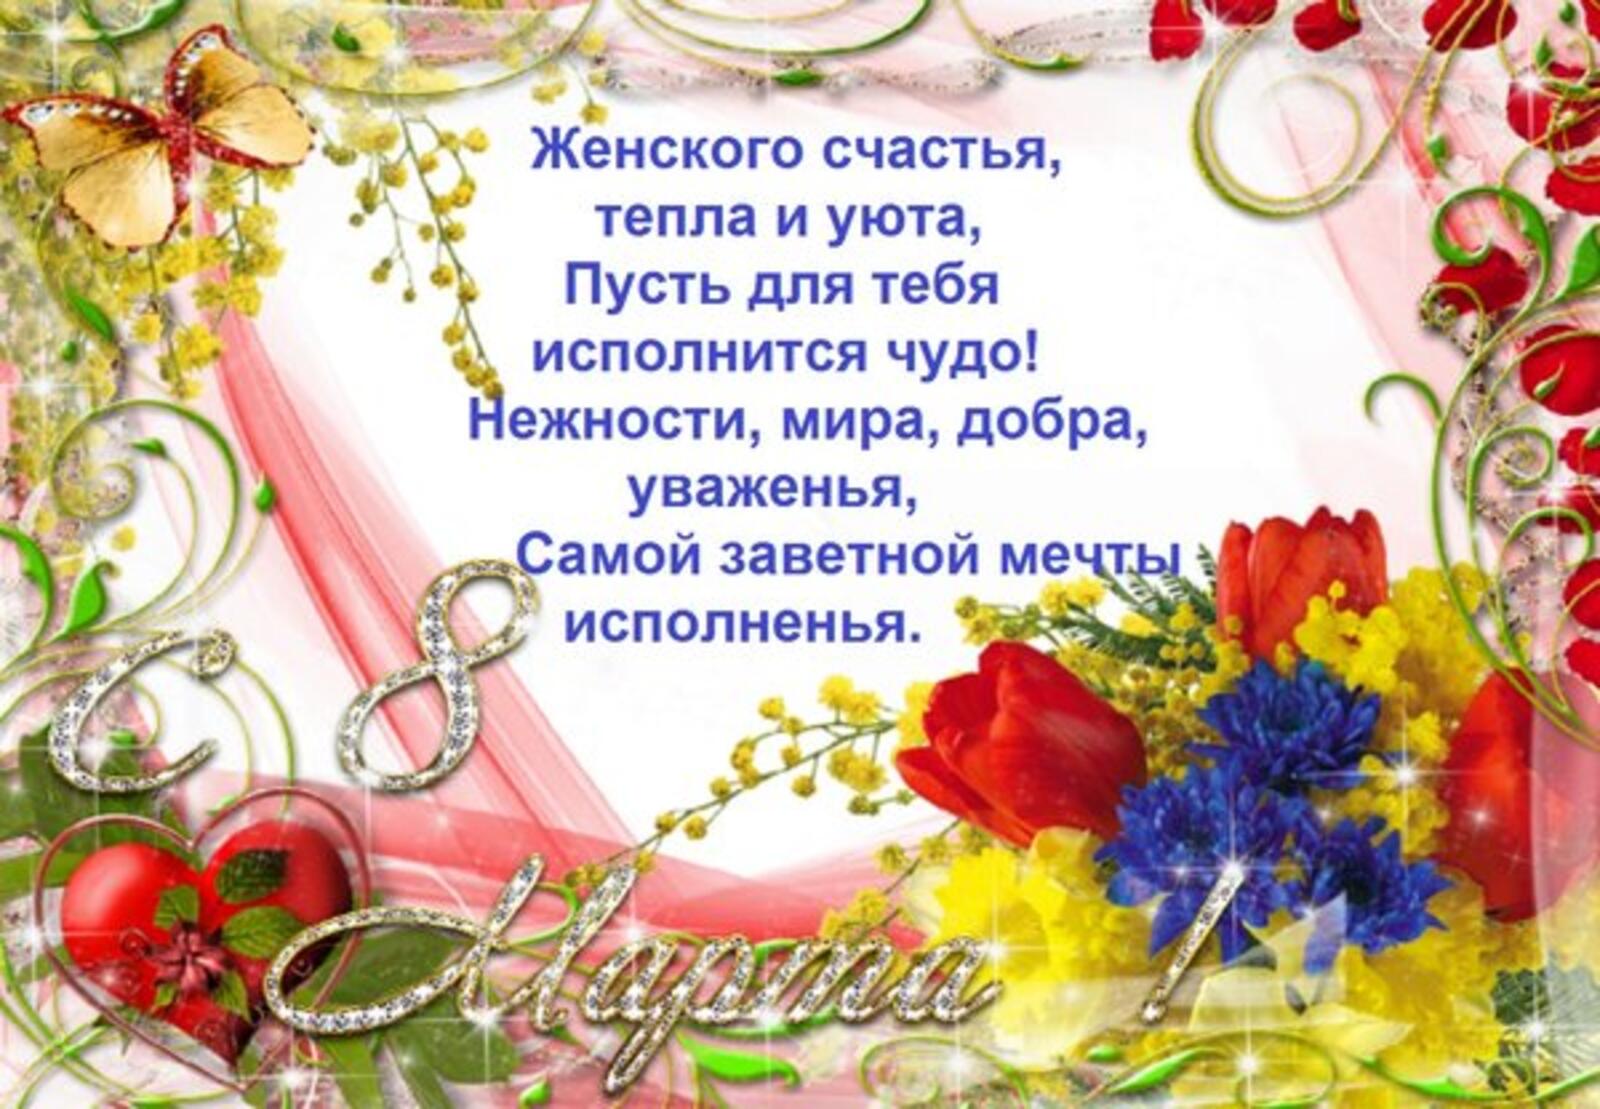 bouquet of flowers verse women`s happiness